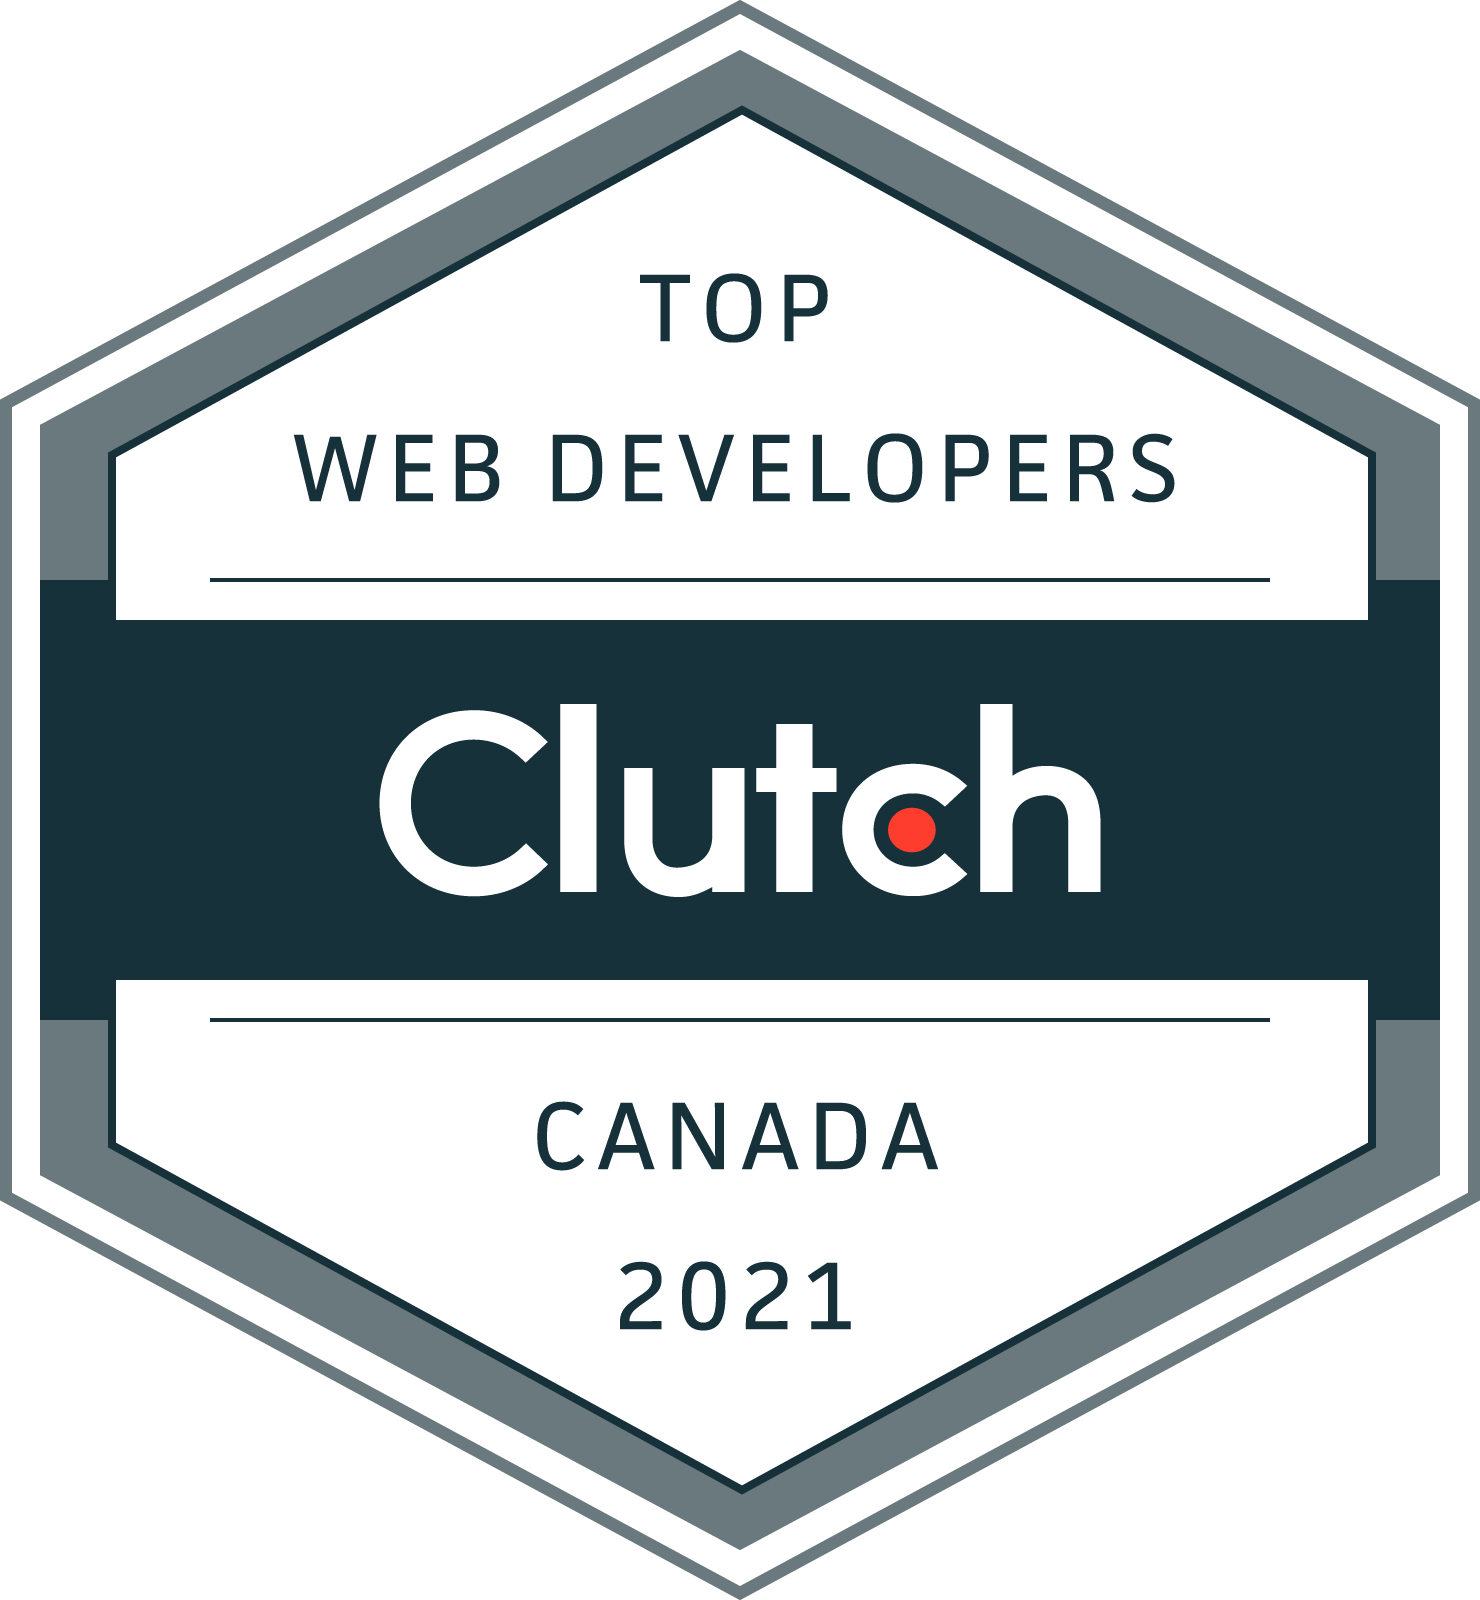 Clutch Top Web Developers Canada 2021